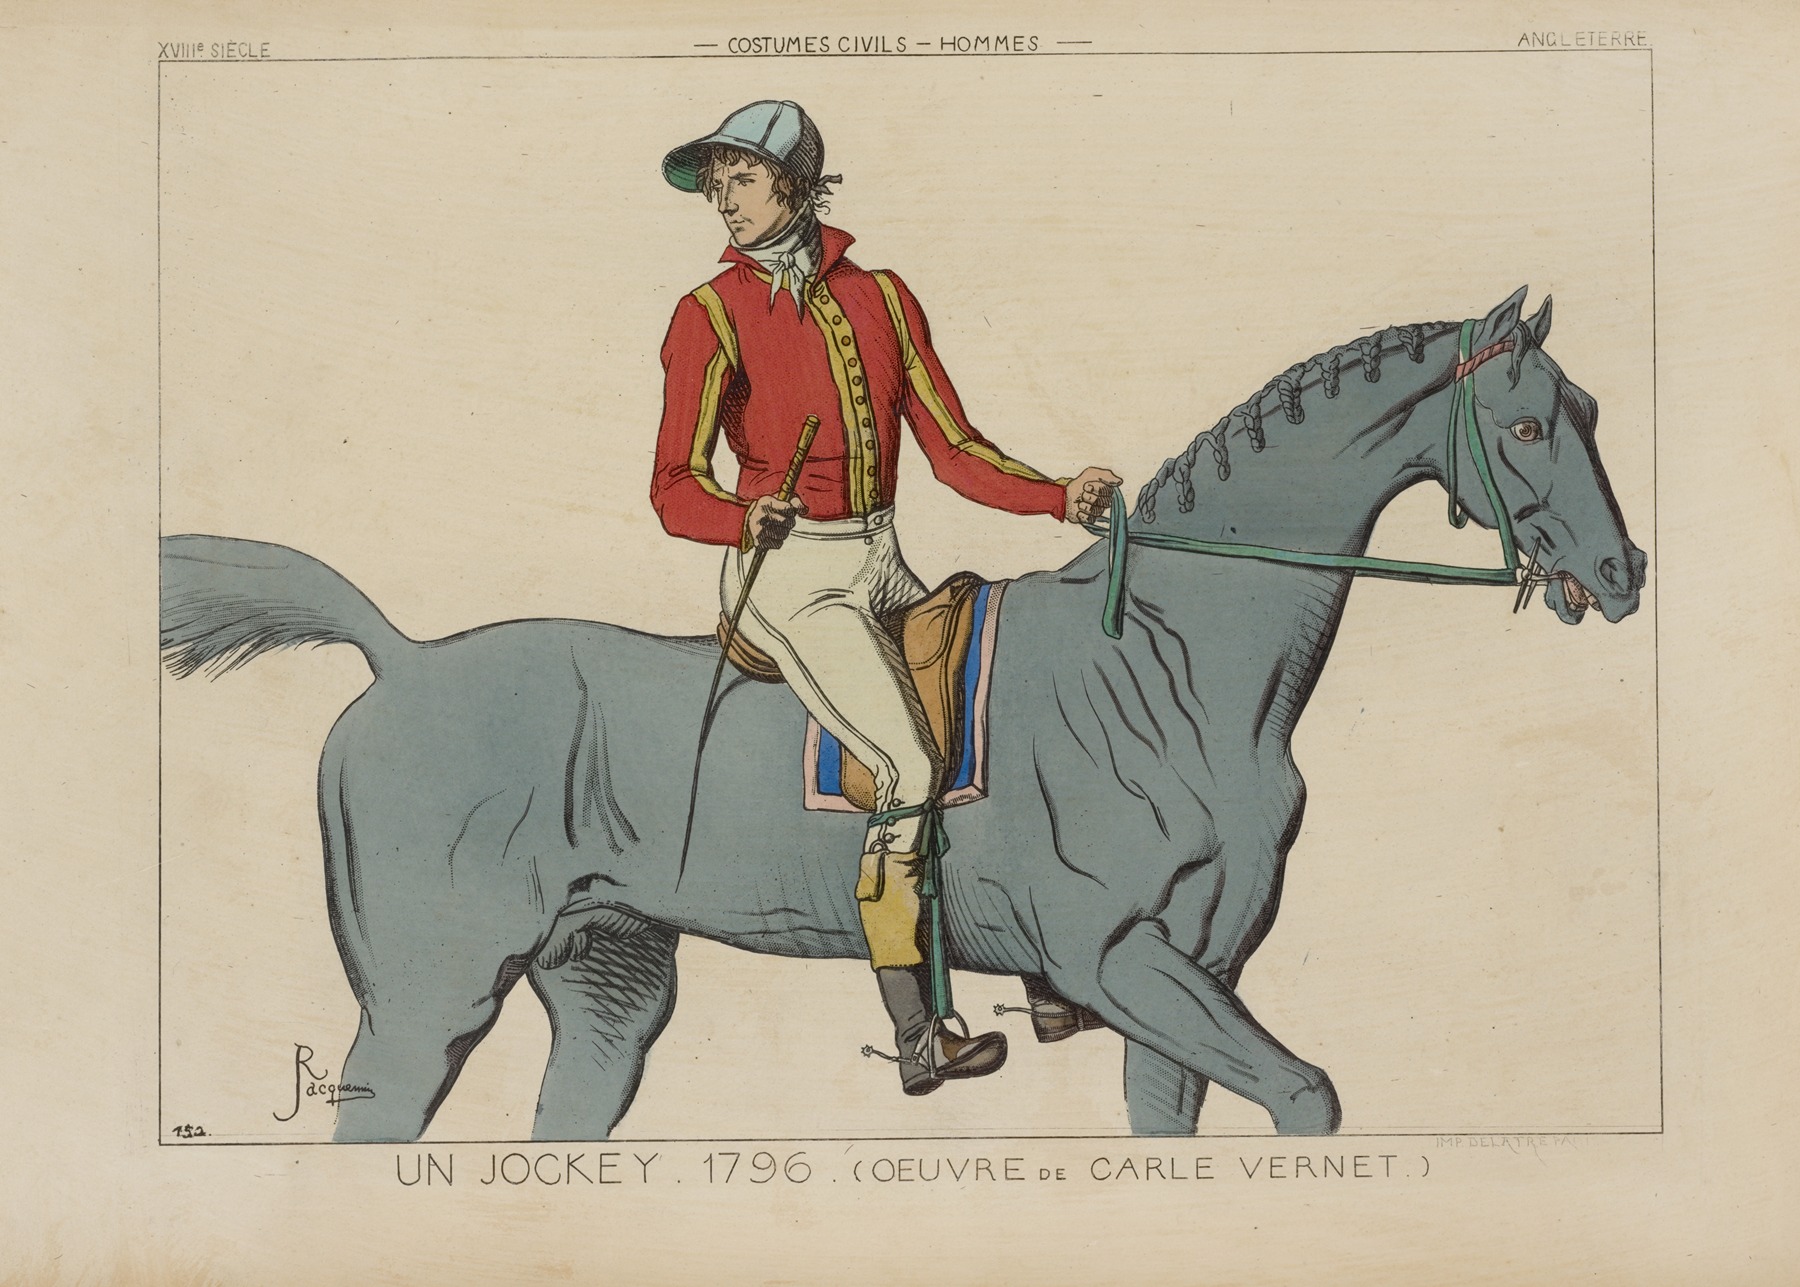 Raphaël Jacquemin - Un jockey. 1796. (Oeuvre de Carle Vernet.) XVIIIe siècle, costumes civils, hommes, Angleterre.